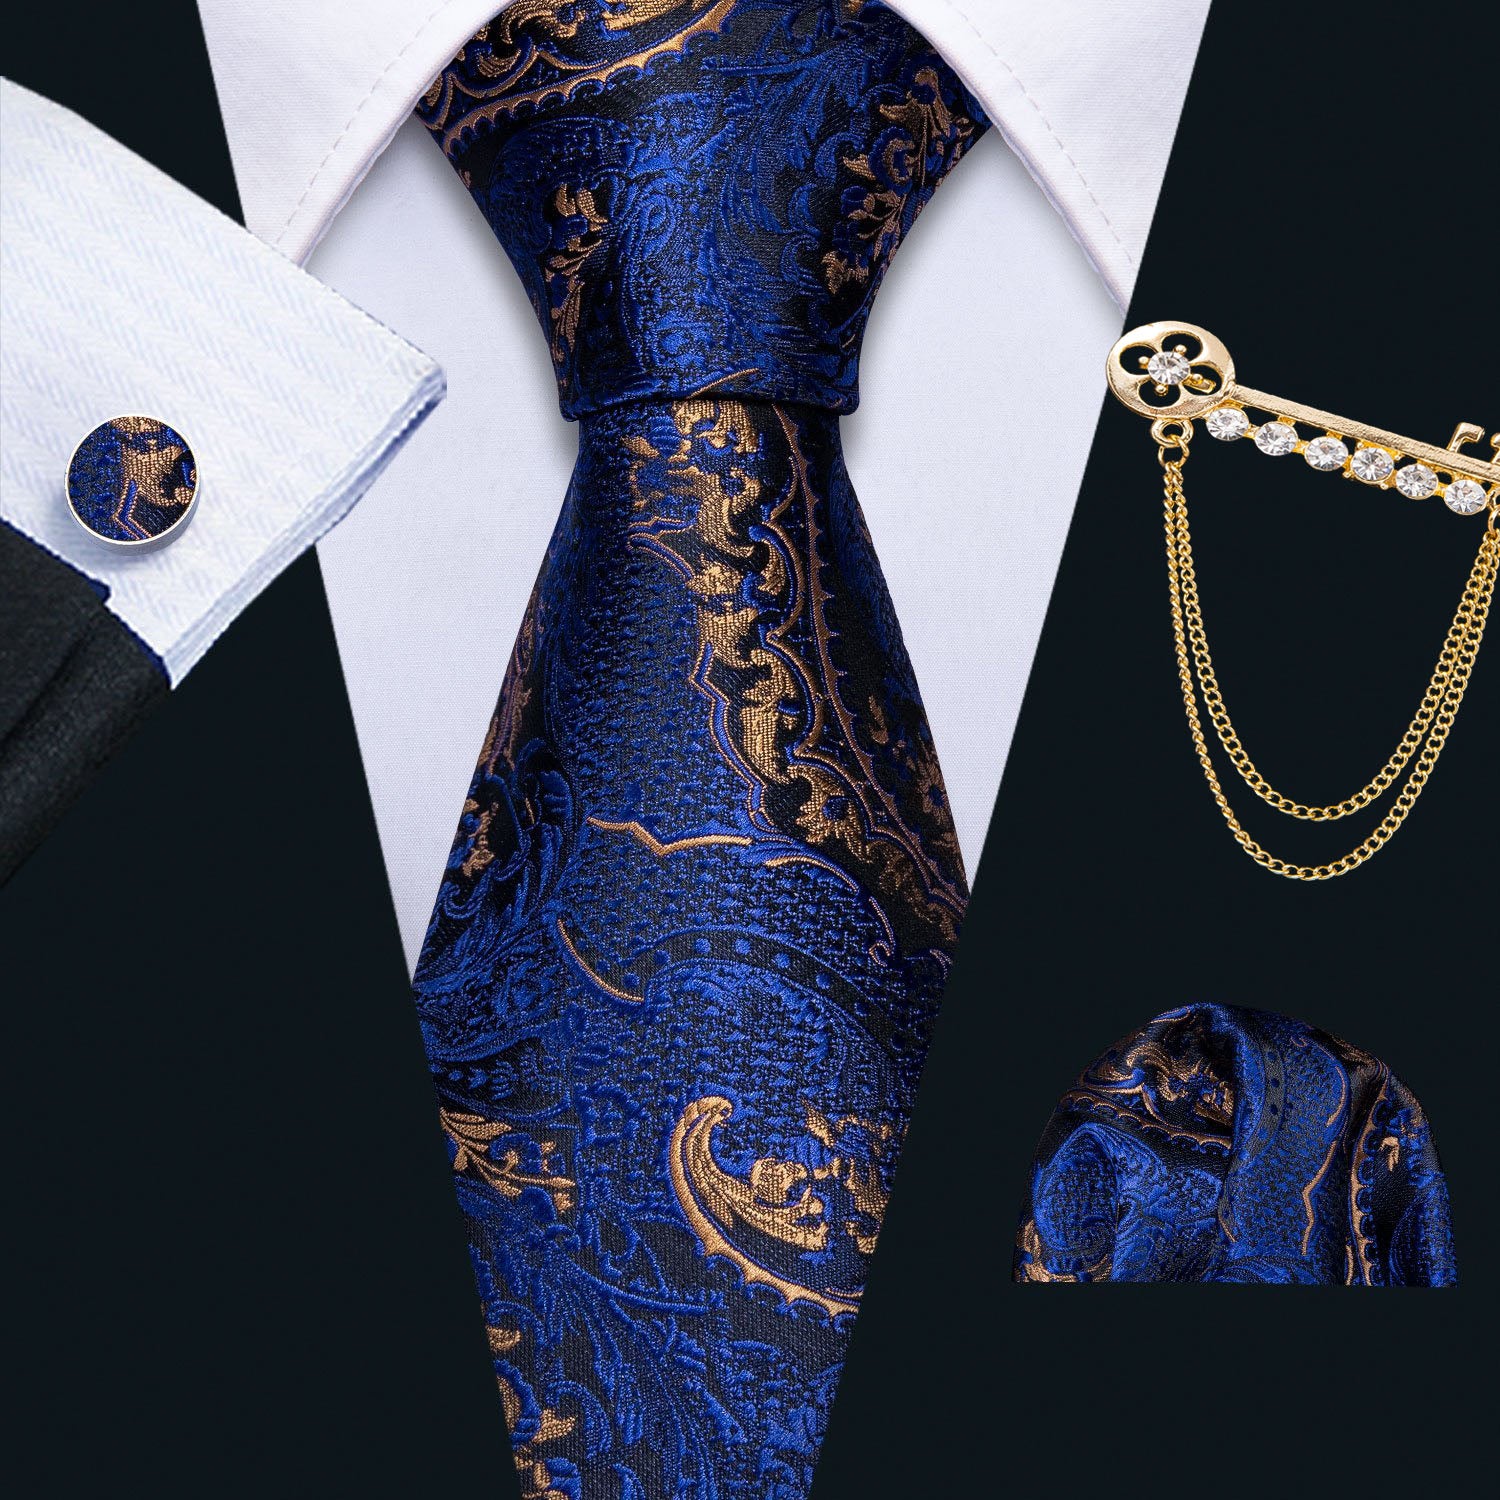 Navy Blue Golden Paisley Men's Tie Lapel Pin Brooch Silk Tie Pocket Square Cufflinks Set Wedding Business Party